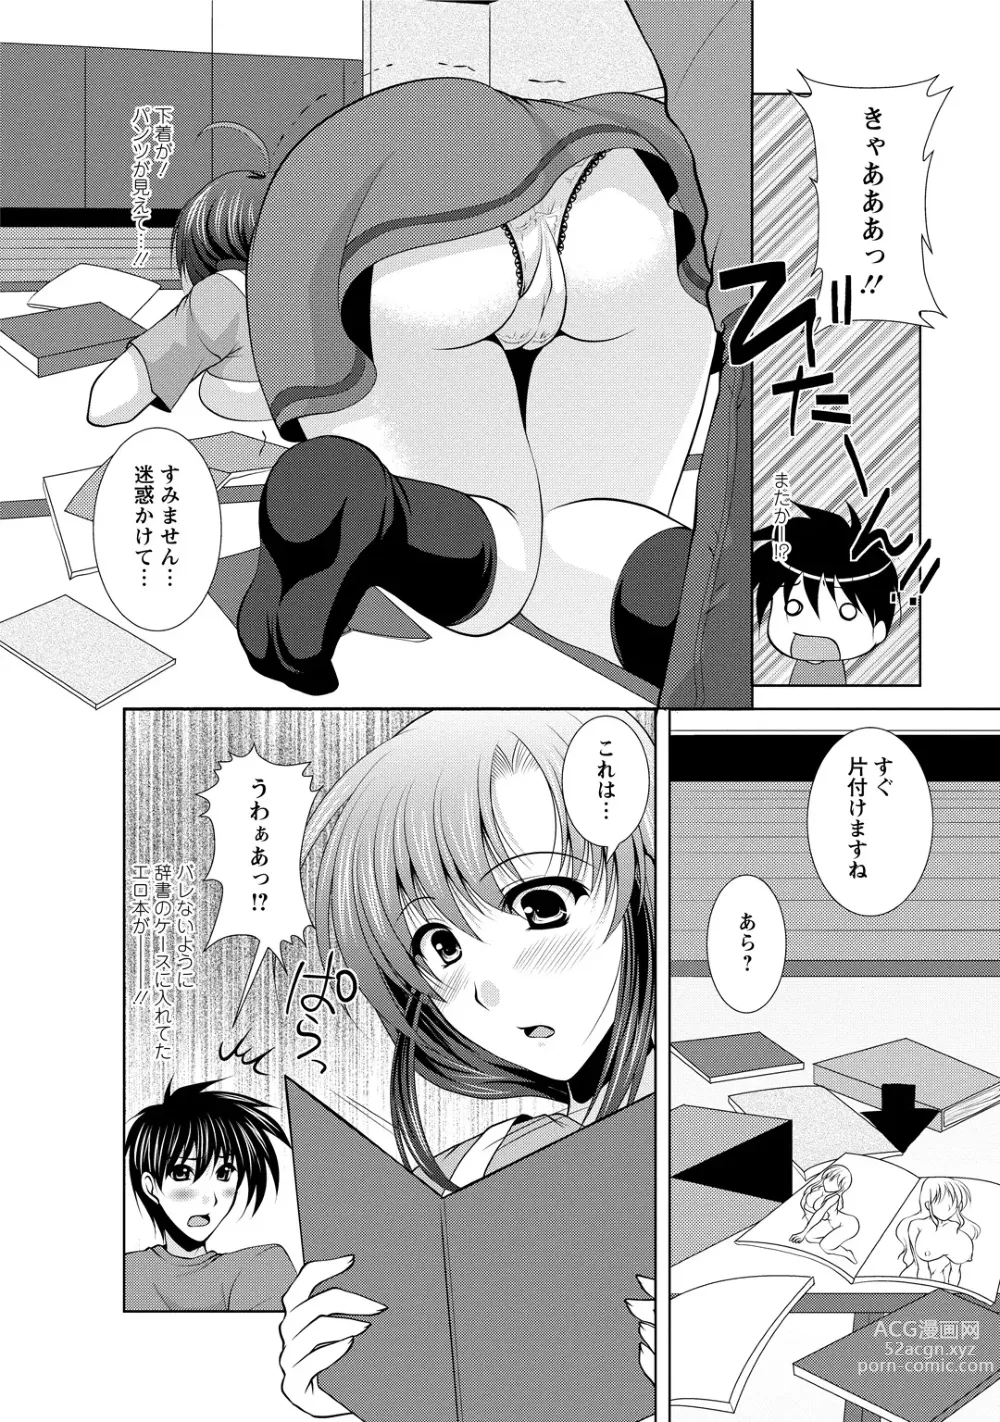 Page 12 of manga Tonatsumaa v01